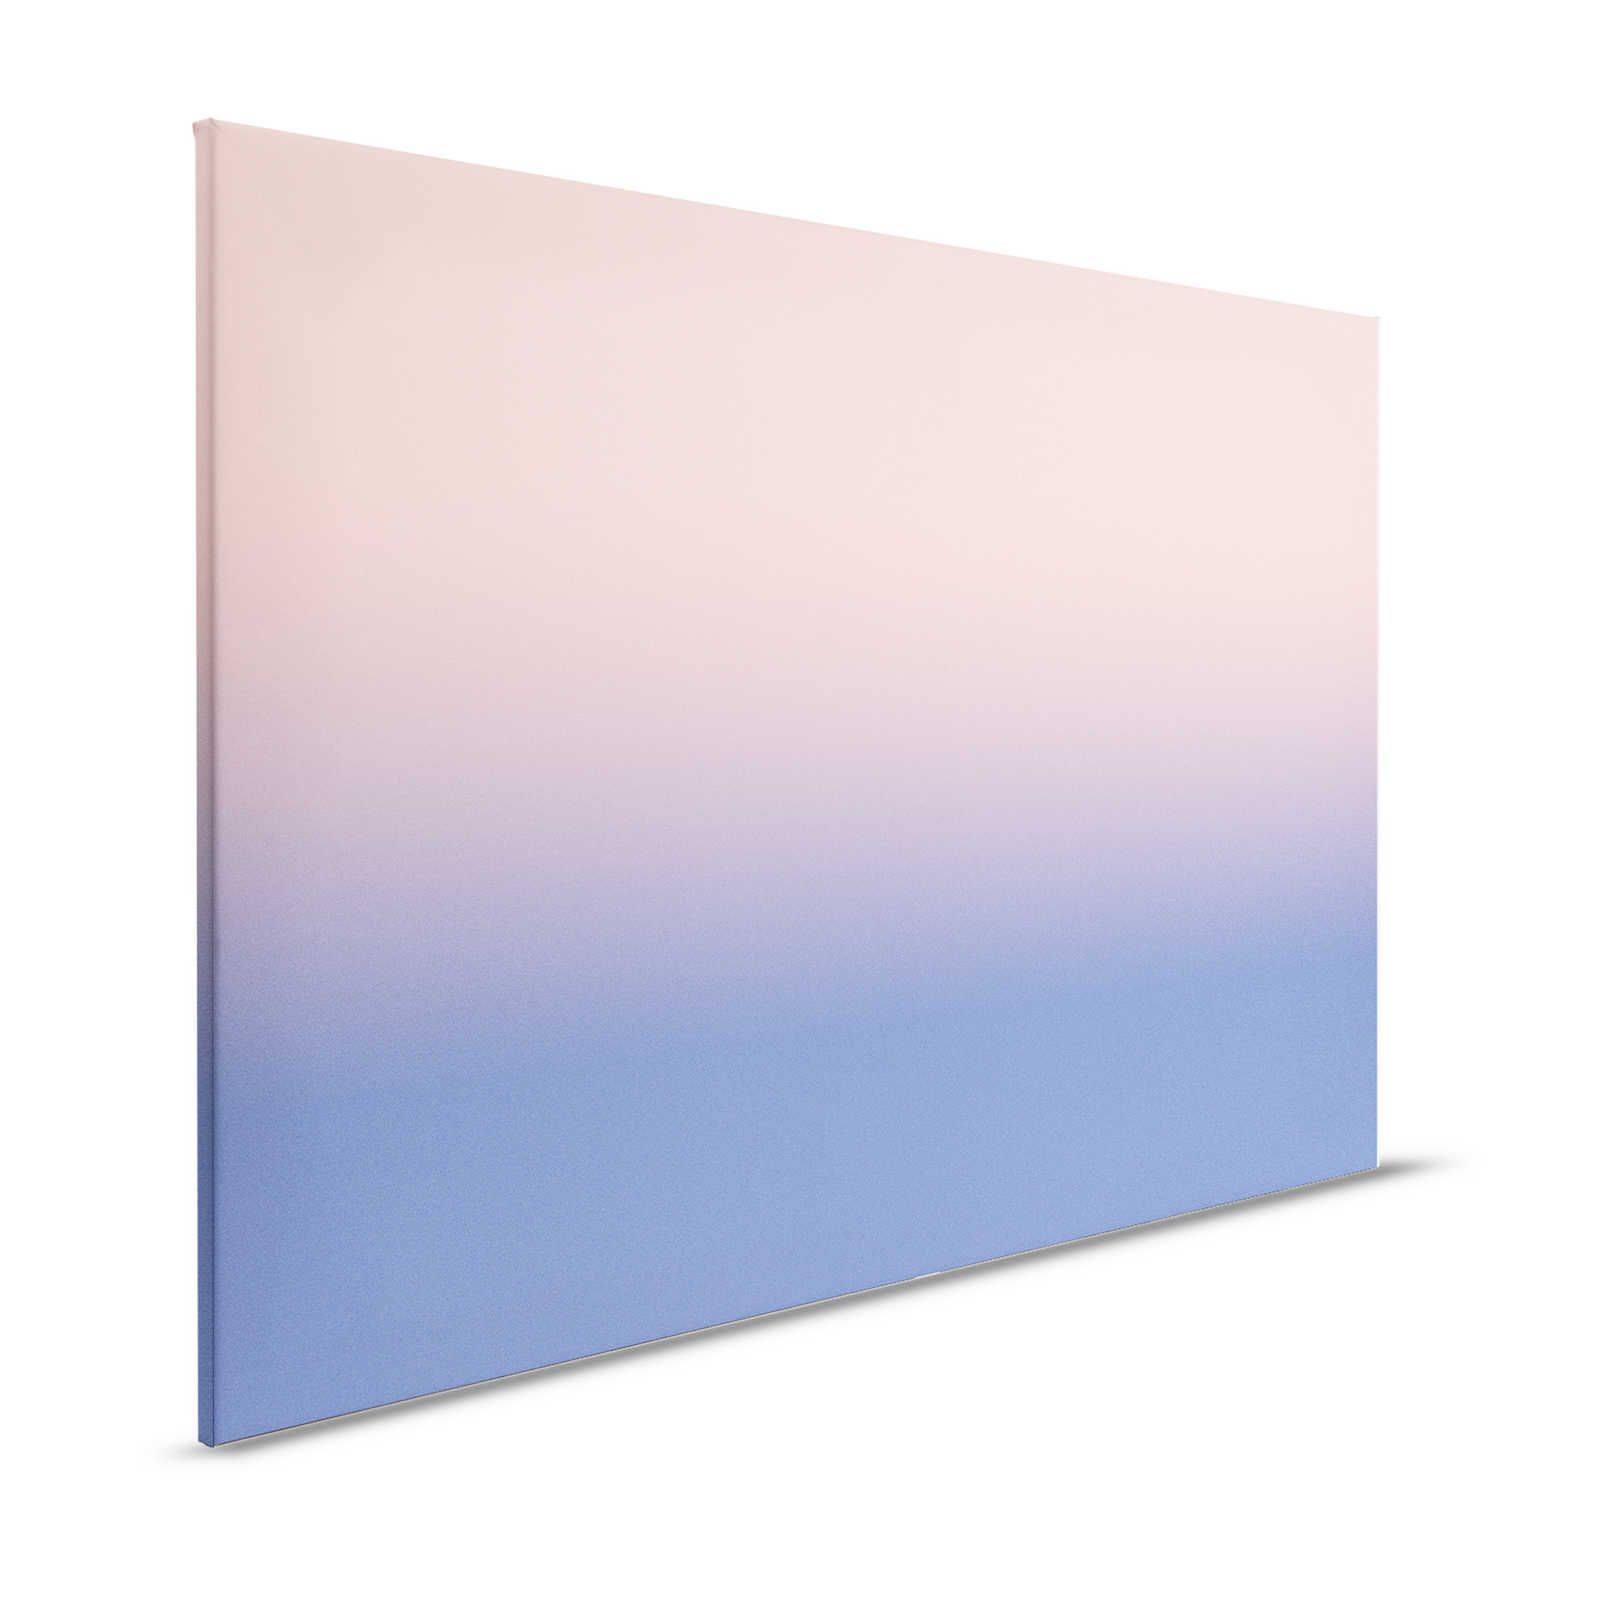 Colour Studio 2 - Ombre Canvas Print Roze & Paars voor meisjeskamer - 1.20 m x 0.80 m
